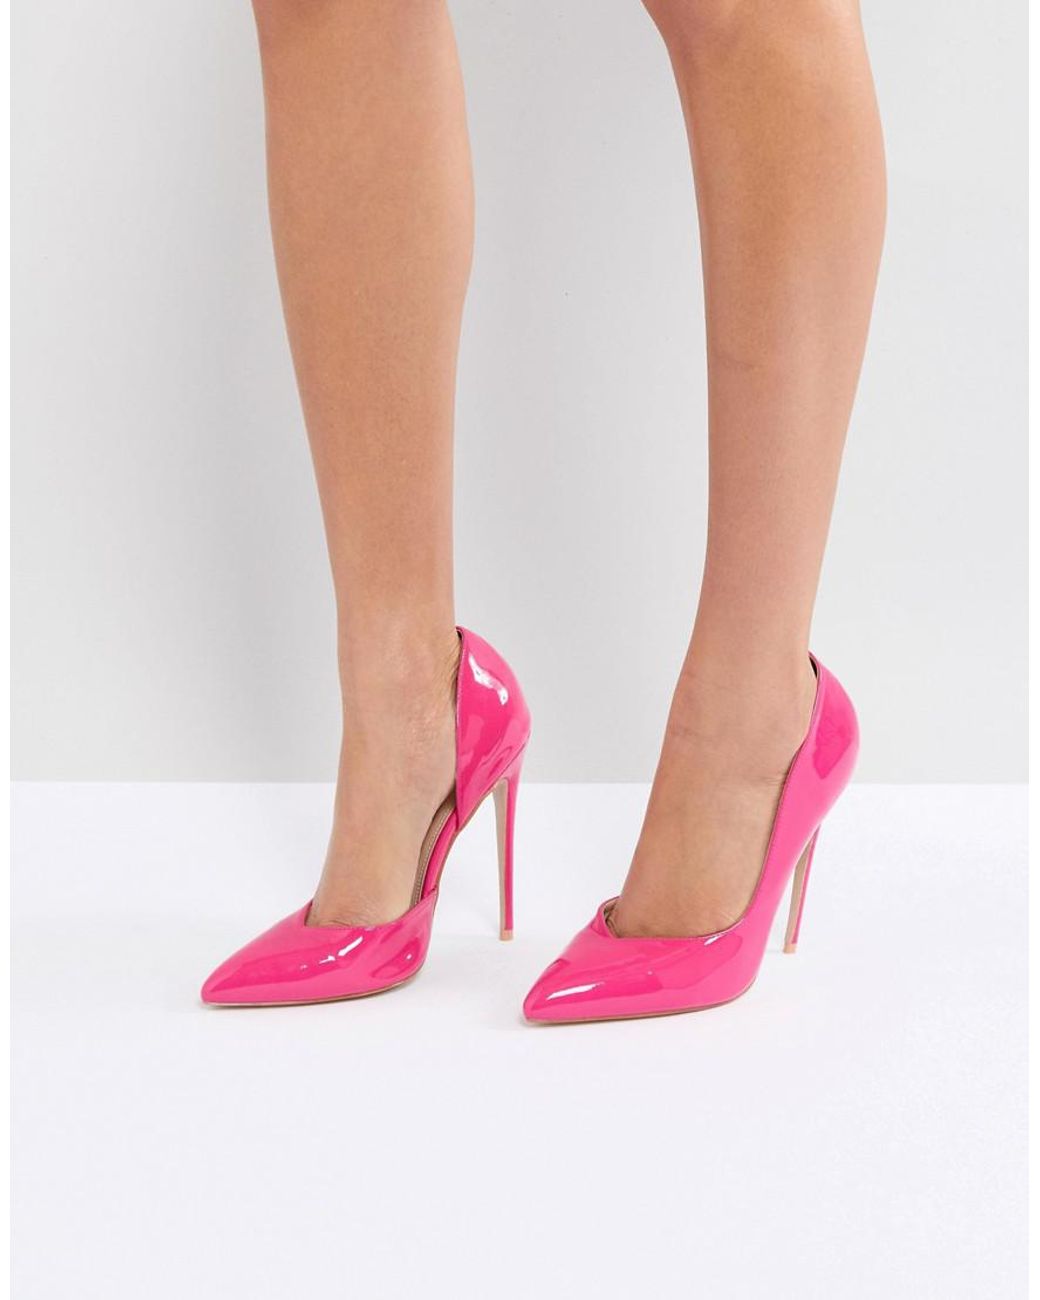 Розовые лодочки. Туфли розовые. Ярко розовые туфли. Розовые туфли на каблуке.